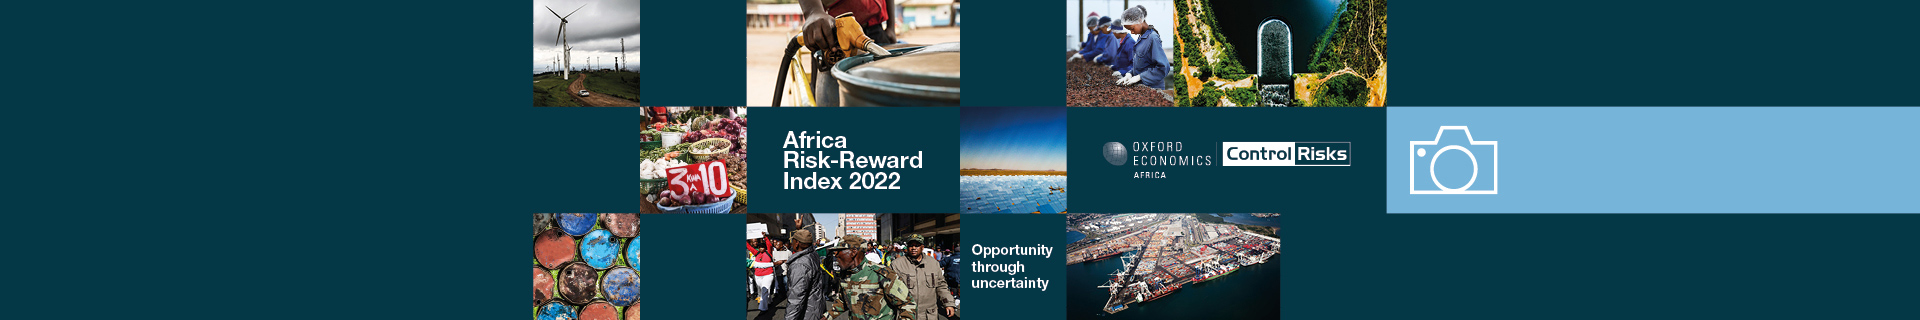 Africa Risk Reward Index 2022 Podcast